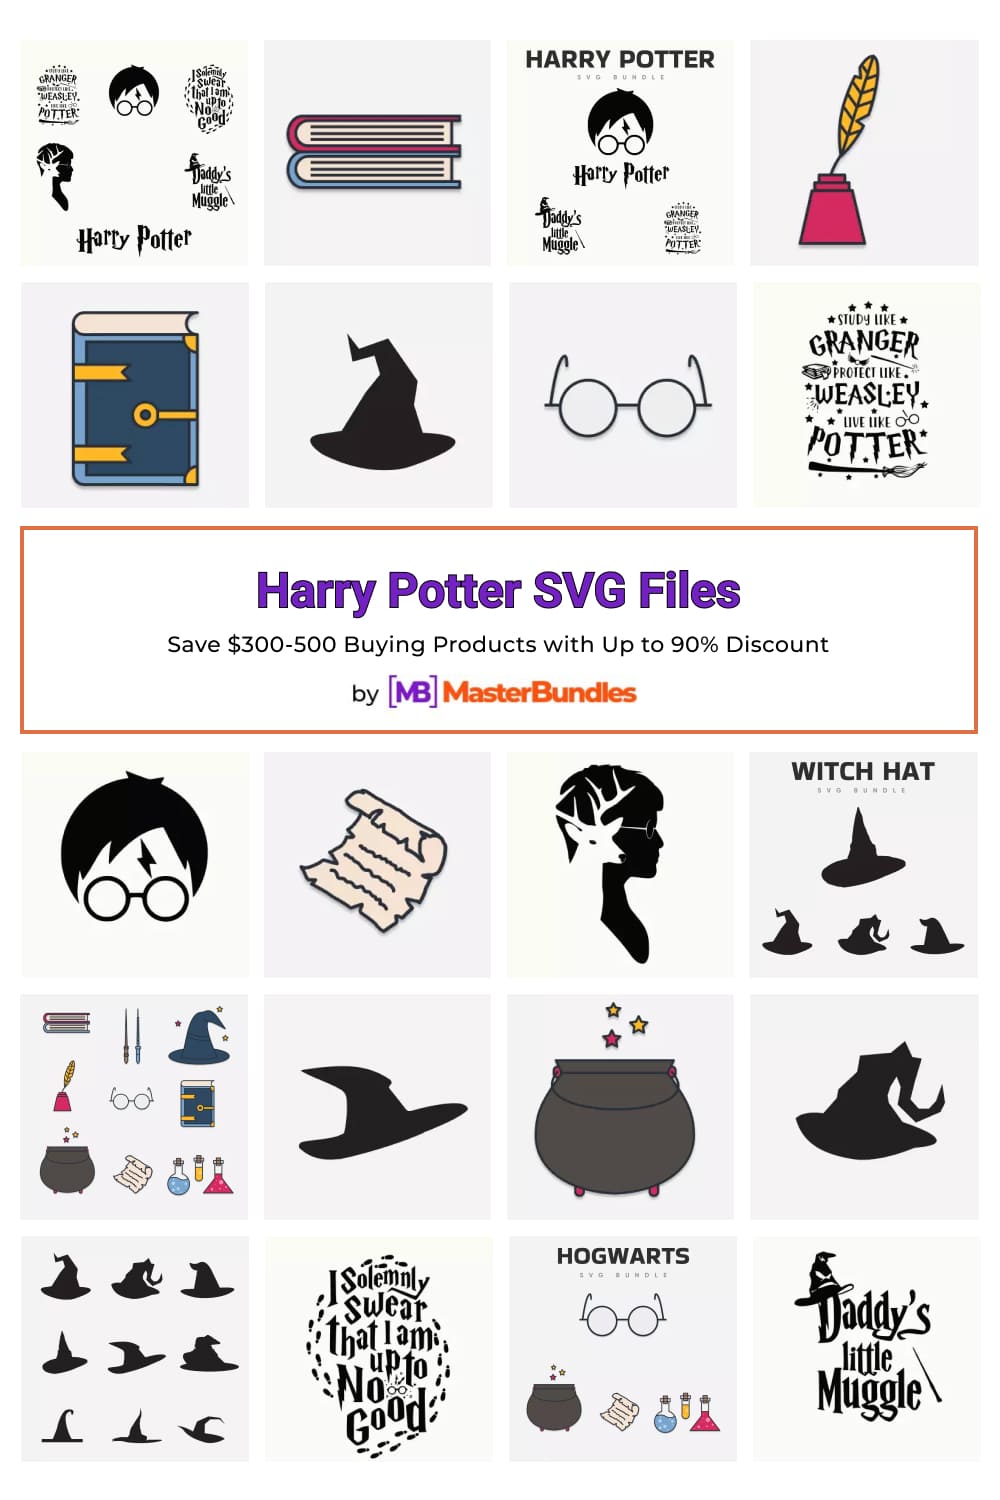 Harry Potter SVG Files for Pinterest.